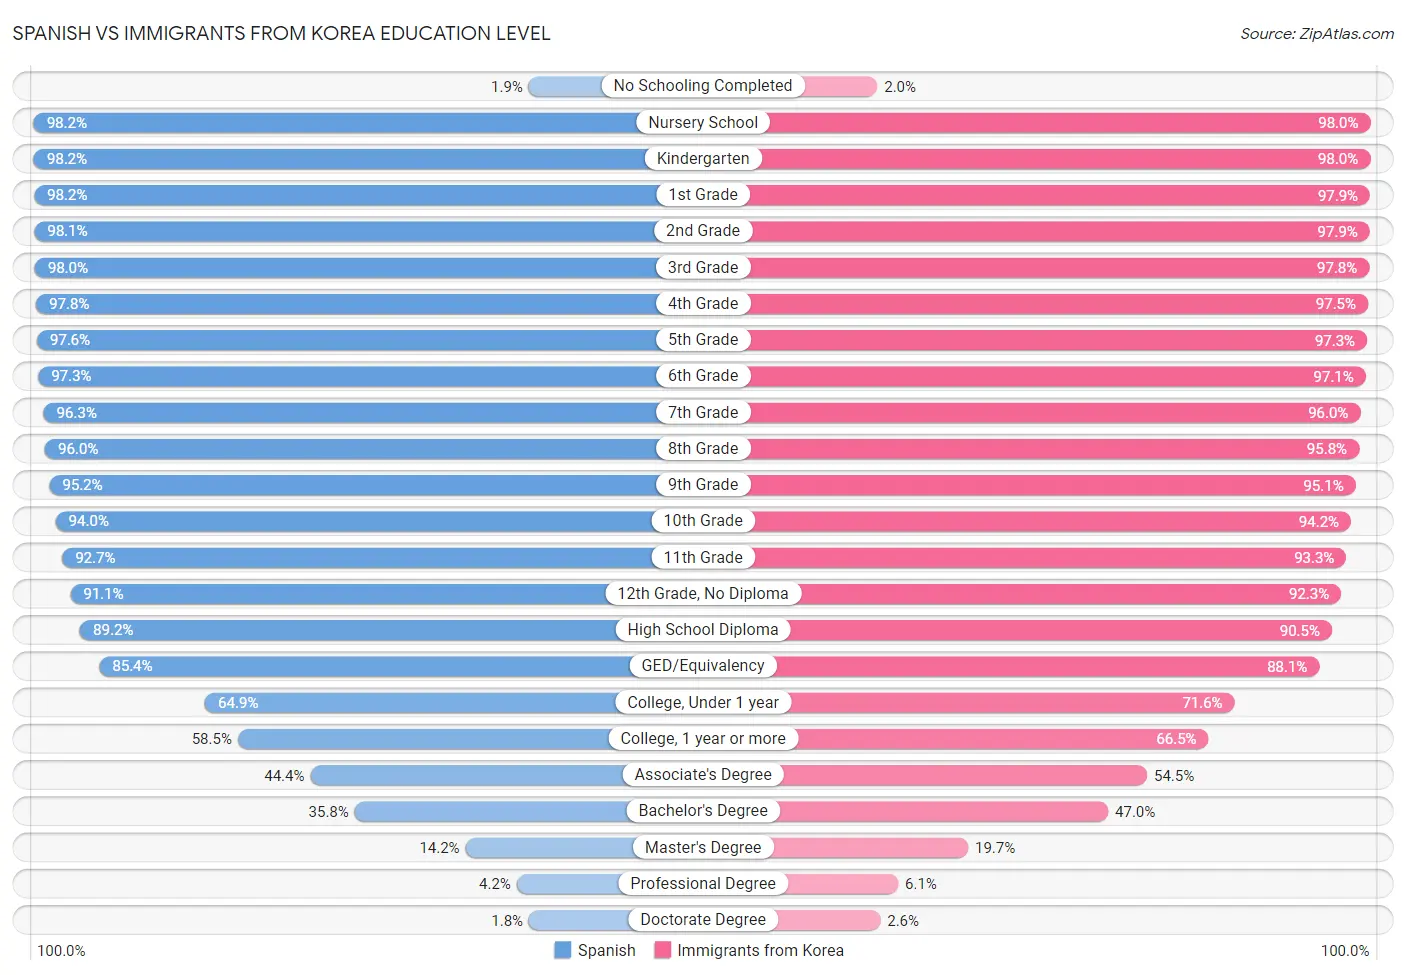 Spanish vs Immigrants from Korea Education Level